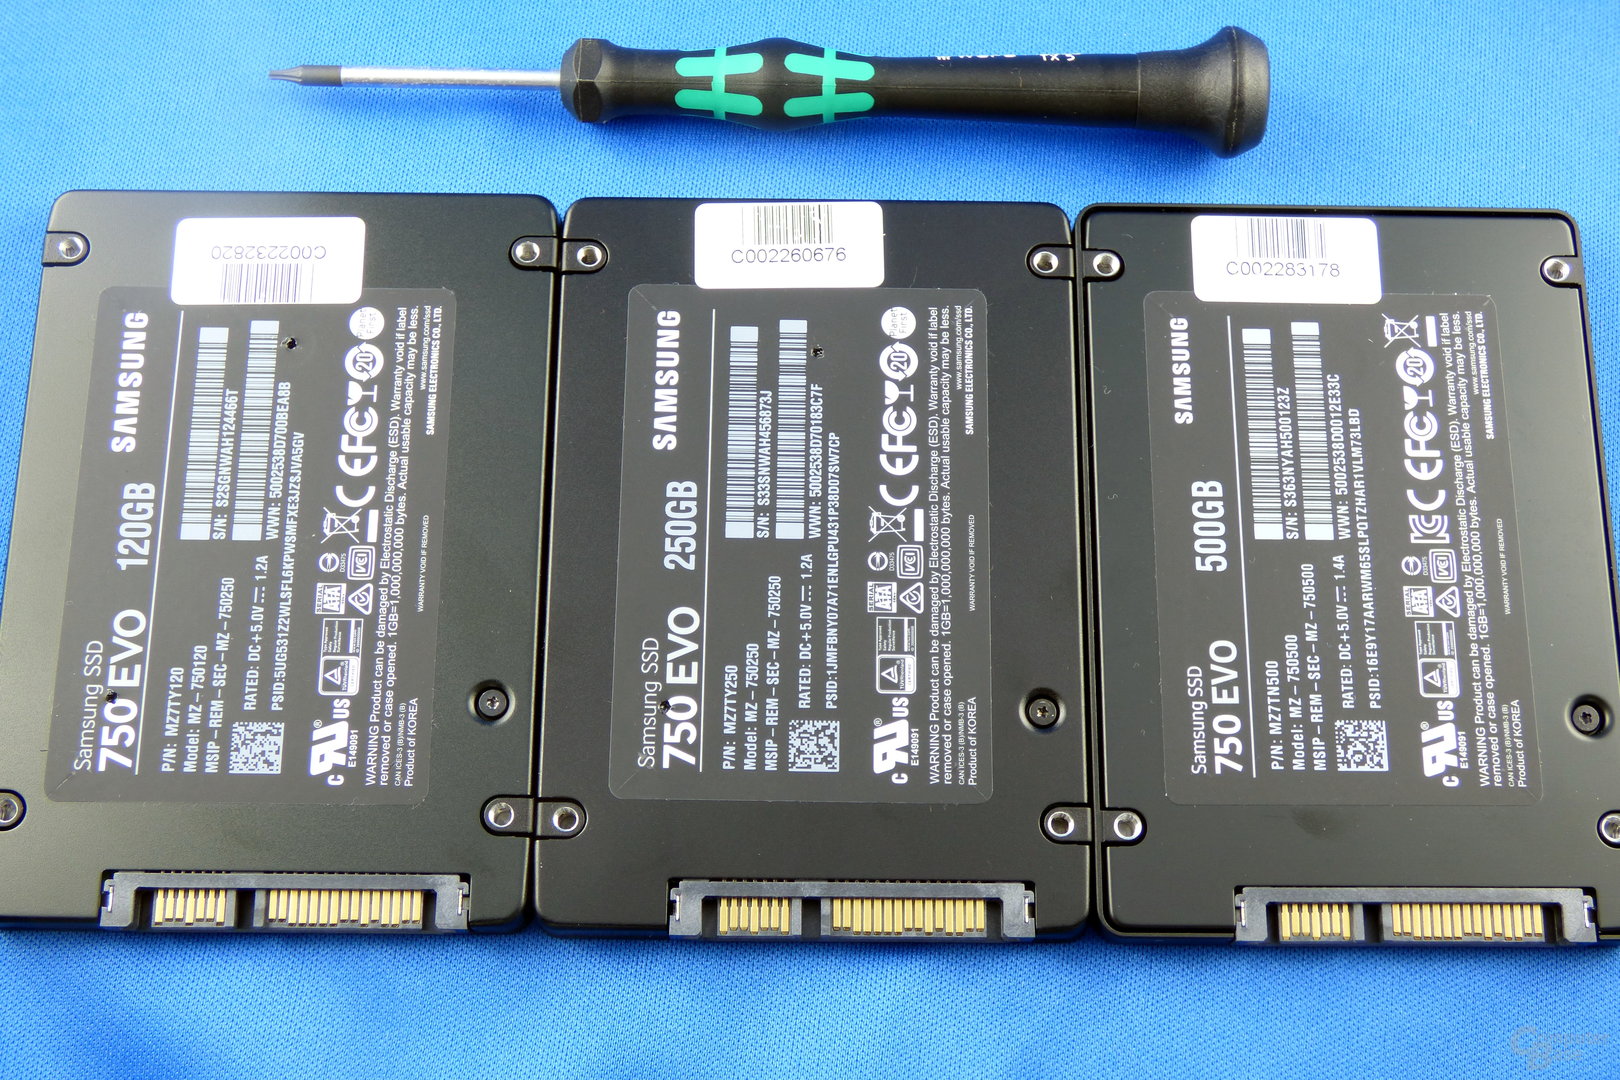 Samsung SSD 750 Evo mit 120, 250 und 500 GB (v.l.n.r.)